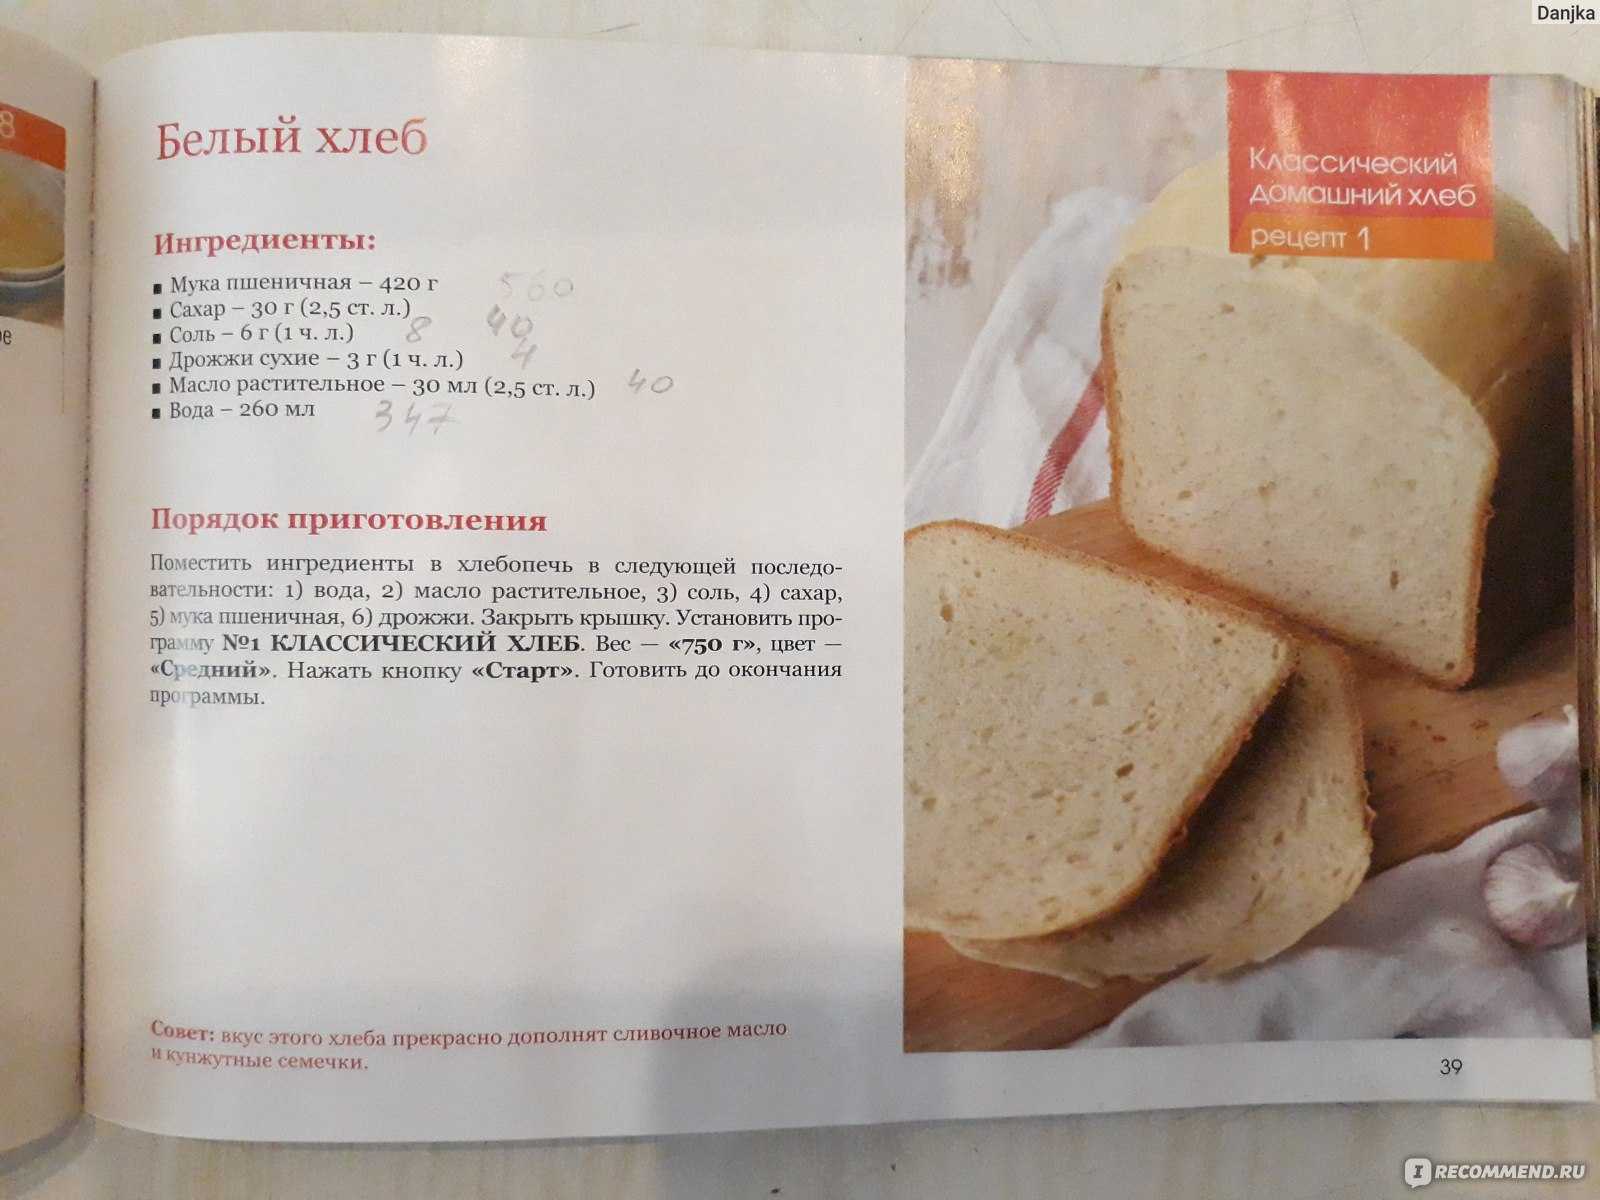 Рецепт теста для хлеба на дрожжах. Рецепт хлеба в хлебопечке. Книжка с рецептами для хлебопечки. Рецепт белого хлеба в хлебопечке. Книжка с рецептами для хлебопечки редмонд.